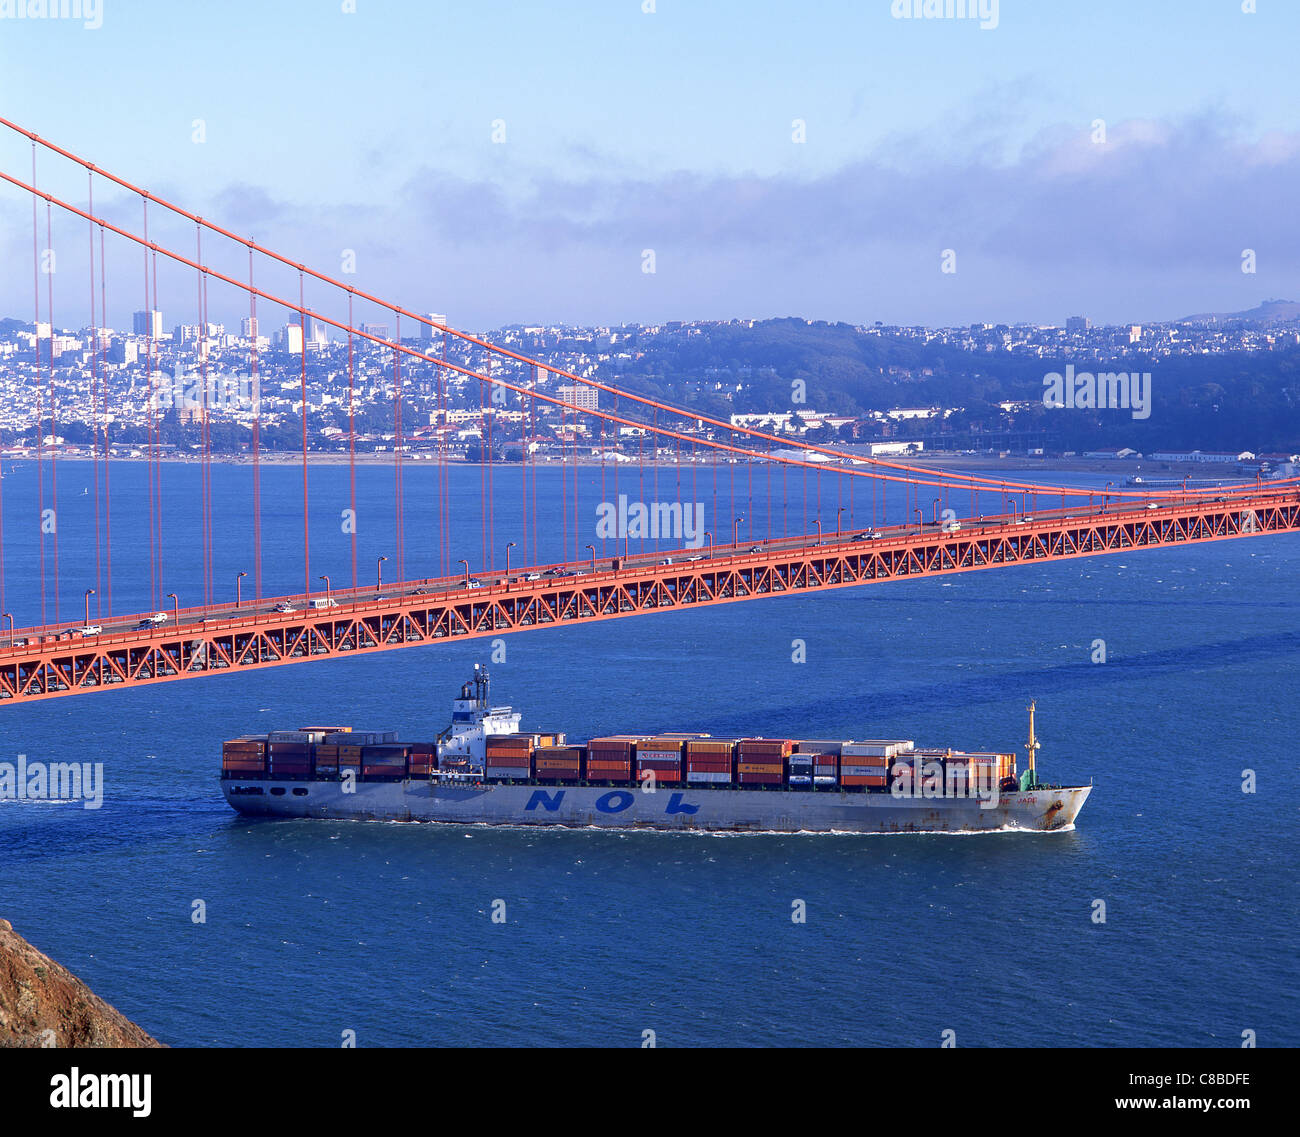 Container ship passing under Golden Gate Bridge, San Francisco Bay Area, San Francisco, California, United States of America Stock Photo